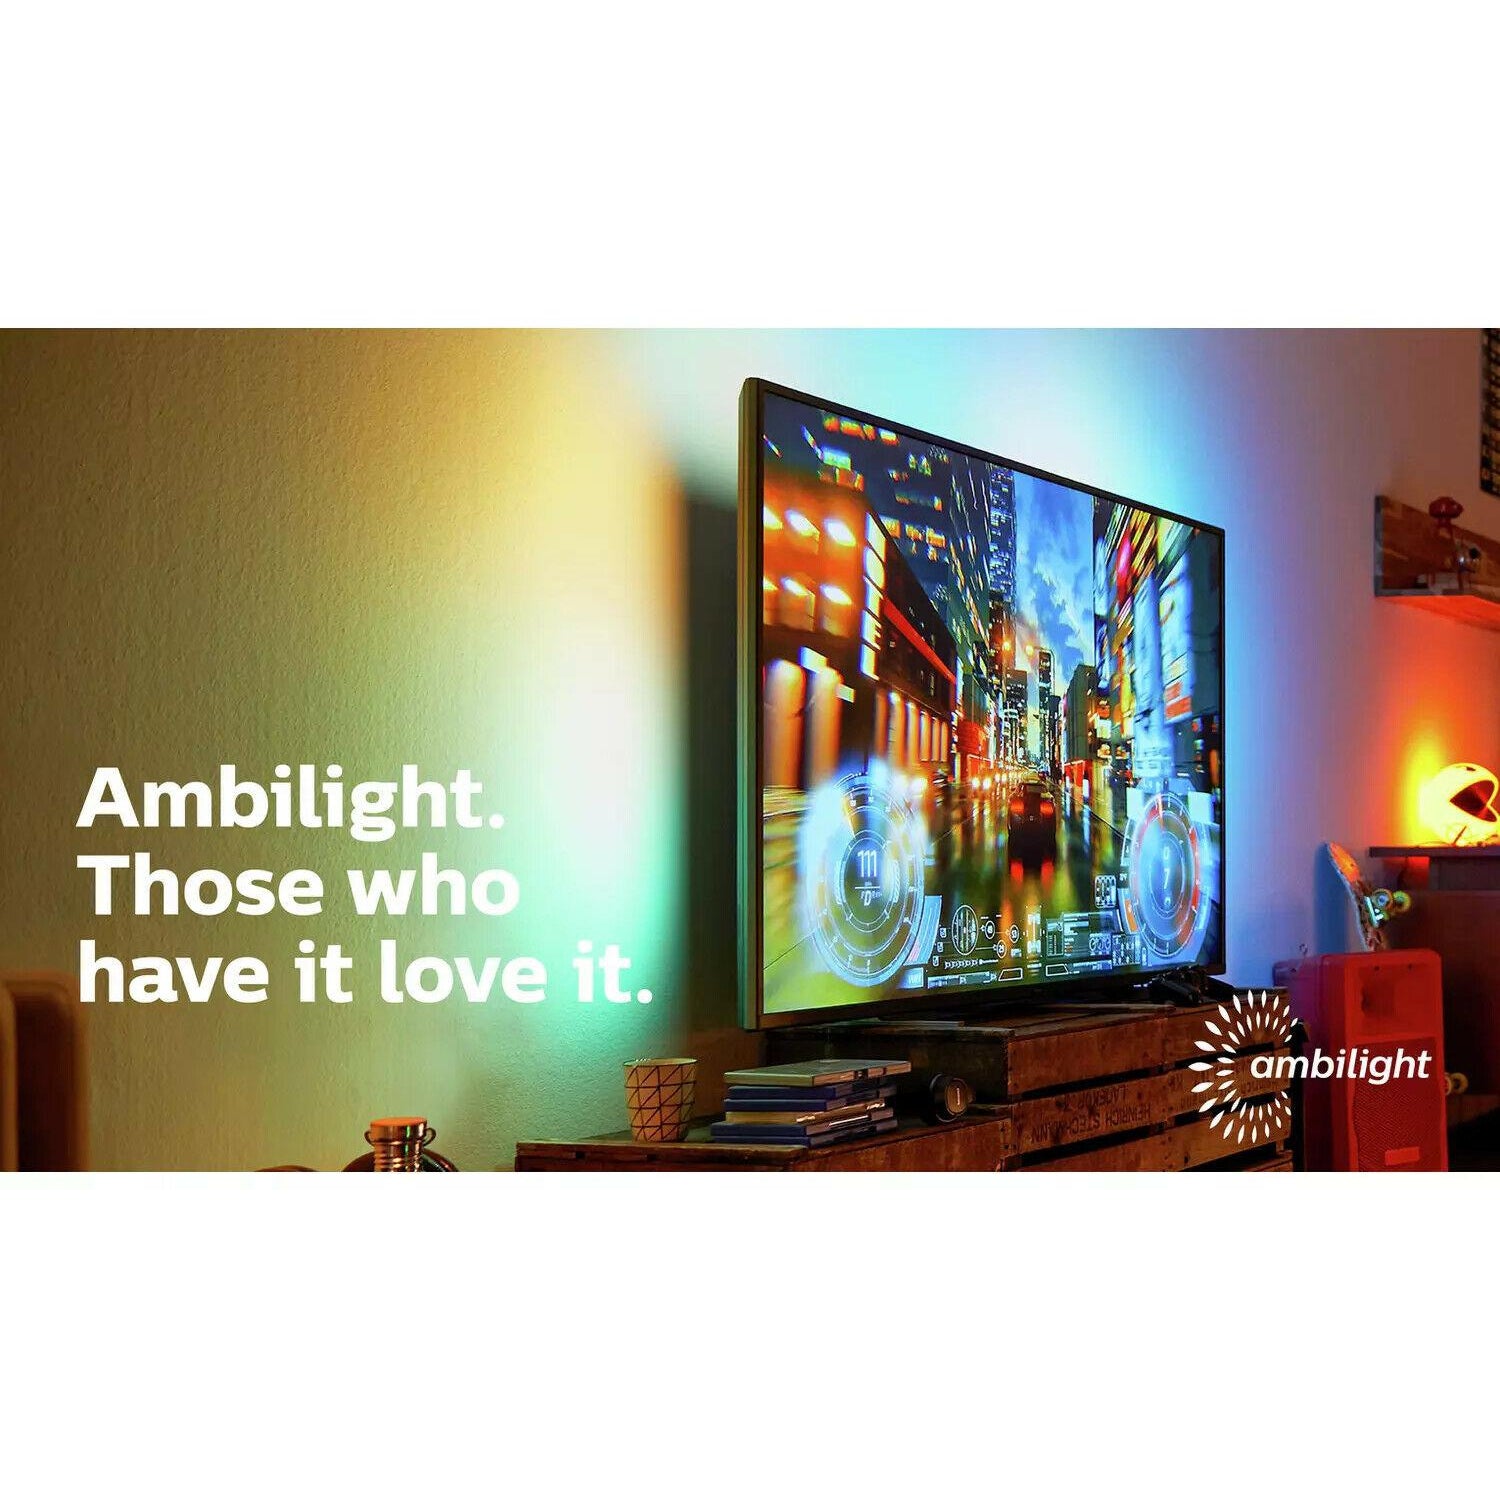 Philips Ambilight 43 Inch 4K UHD Smart TV - 43PUS8536 - Refurbished Good